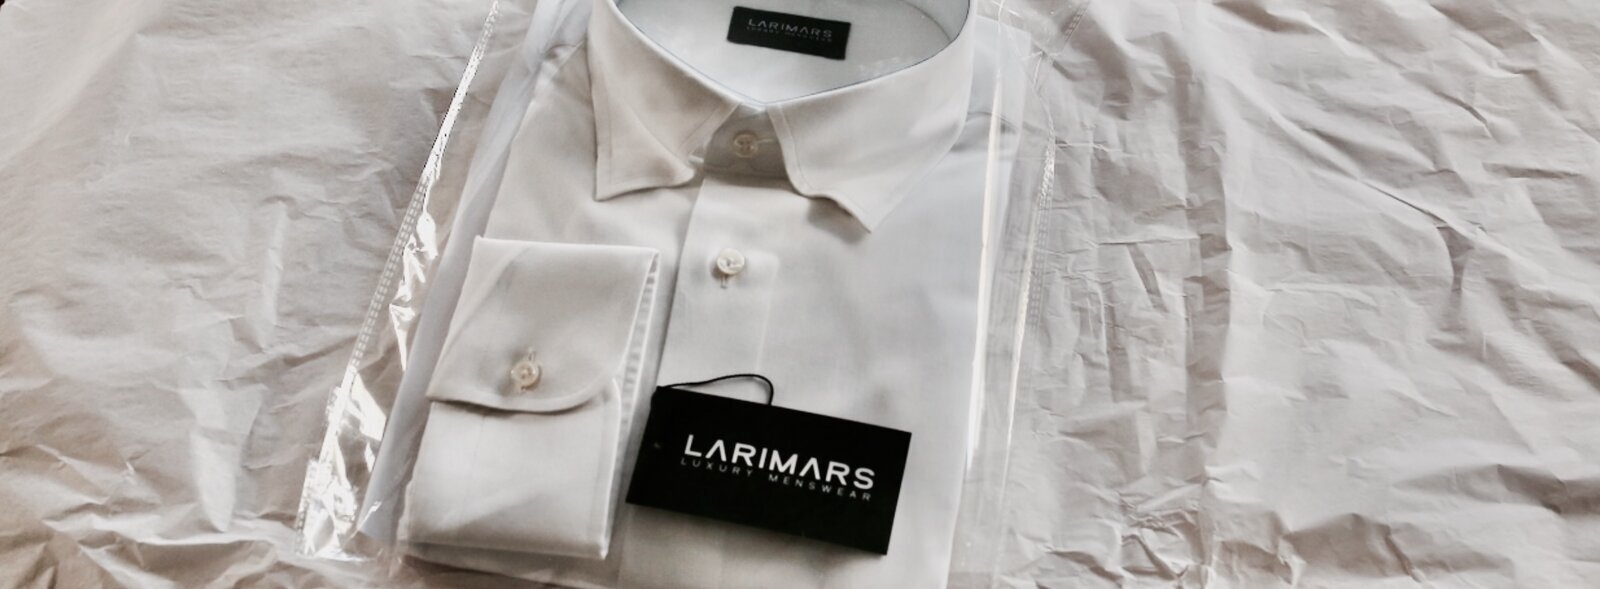 Larimars Trial Shirt: Review